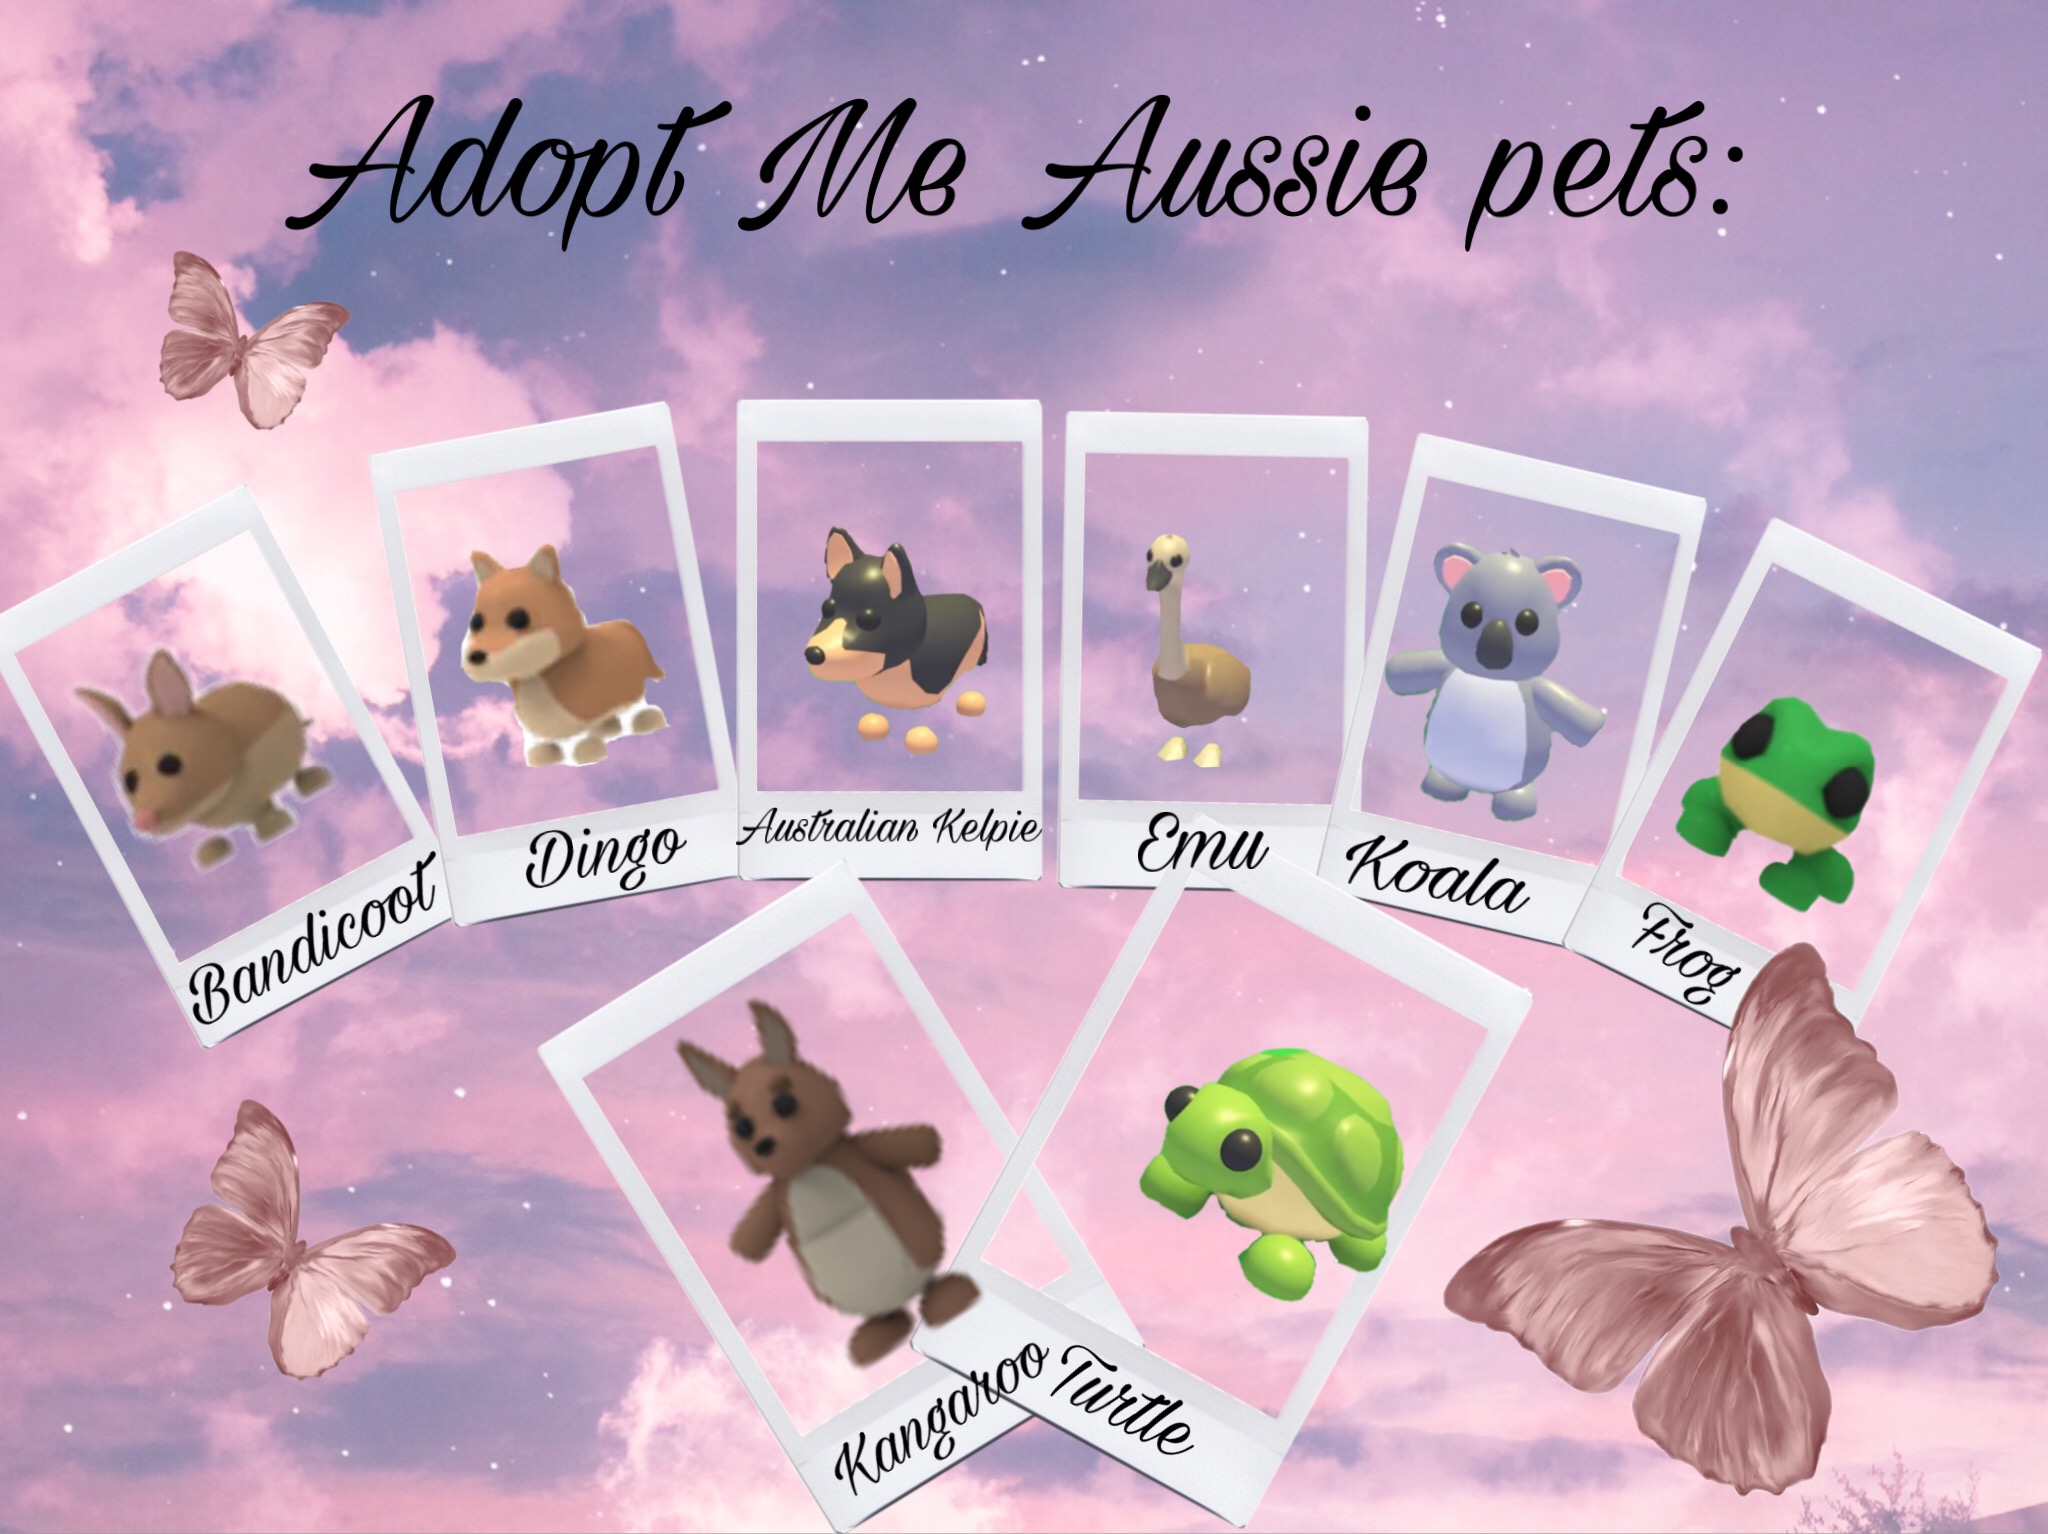 Adoptme Australia Aussie Pets Image By Llouisx0